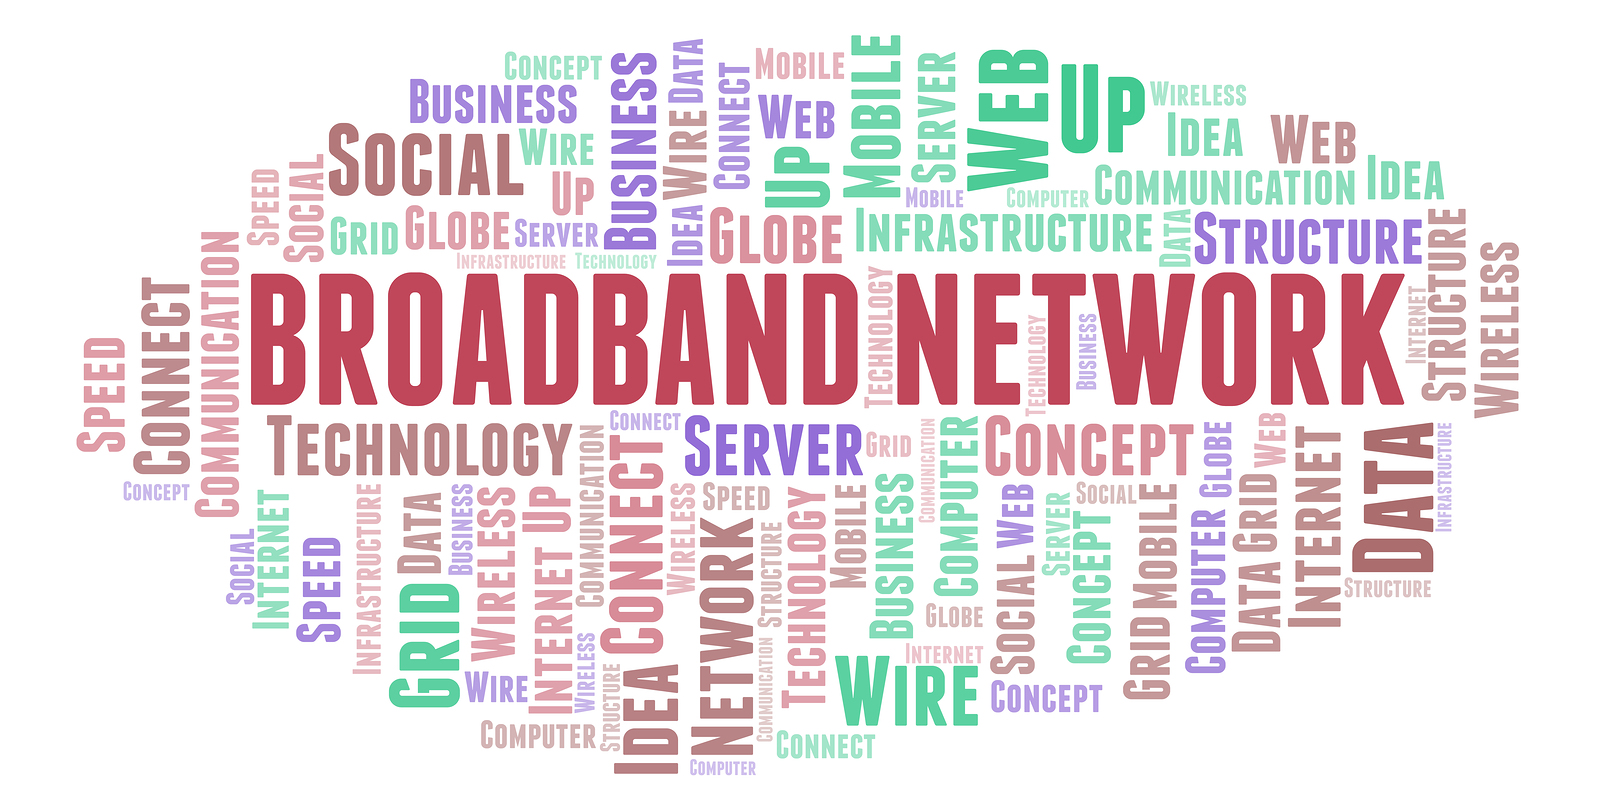 bigstock-Broadband-Network-Word-Cloud--265990759